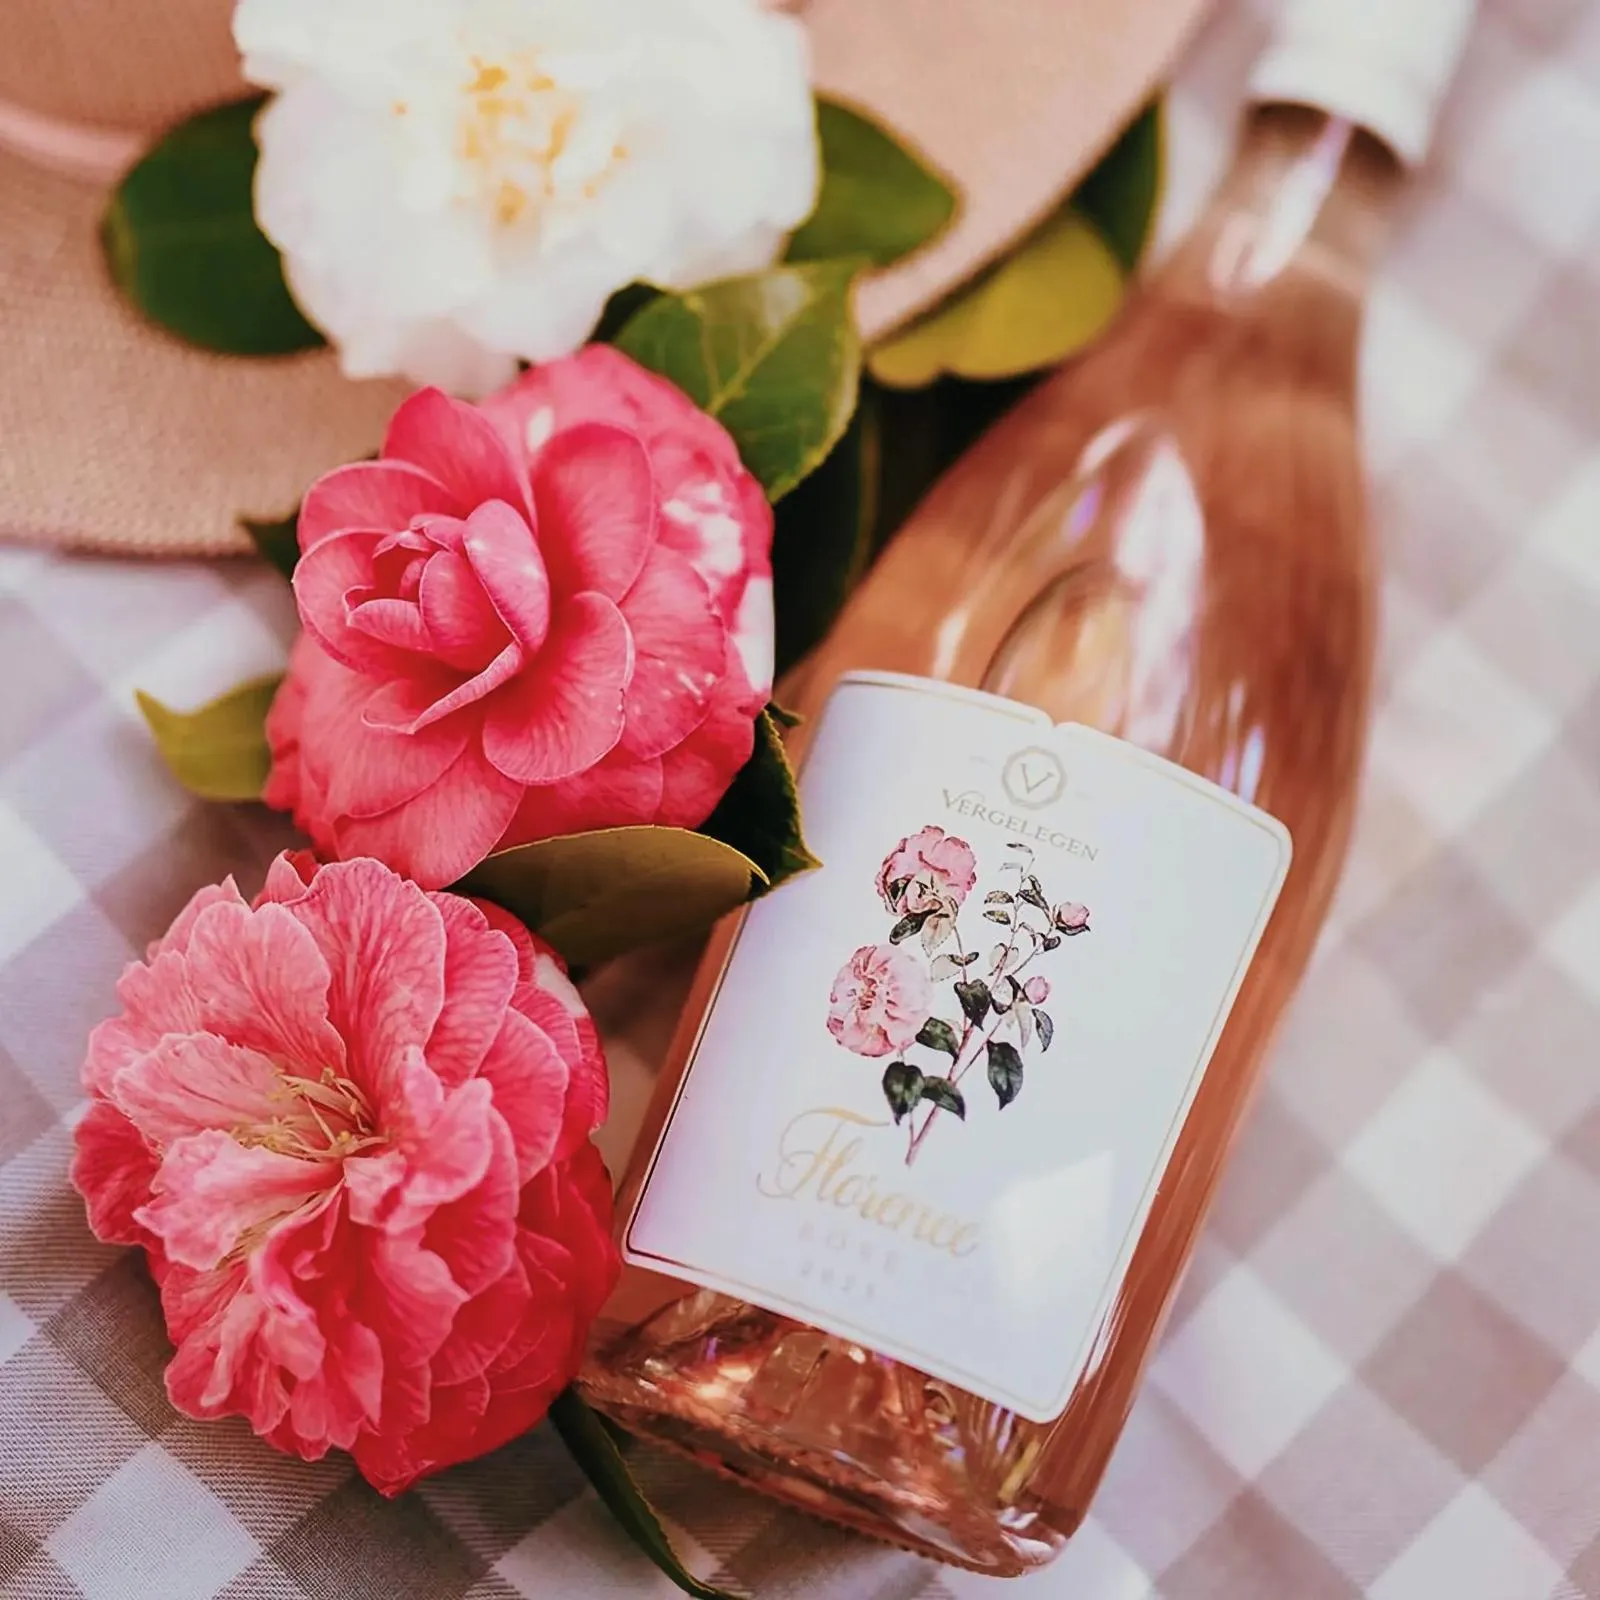 Bottle of Florence Rosé wine with floral arrangement